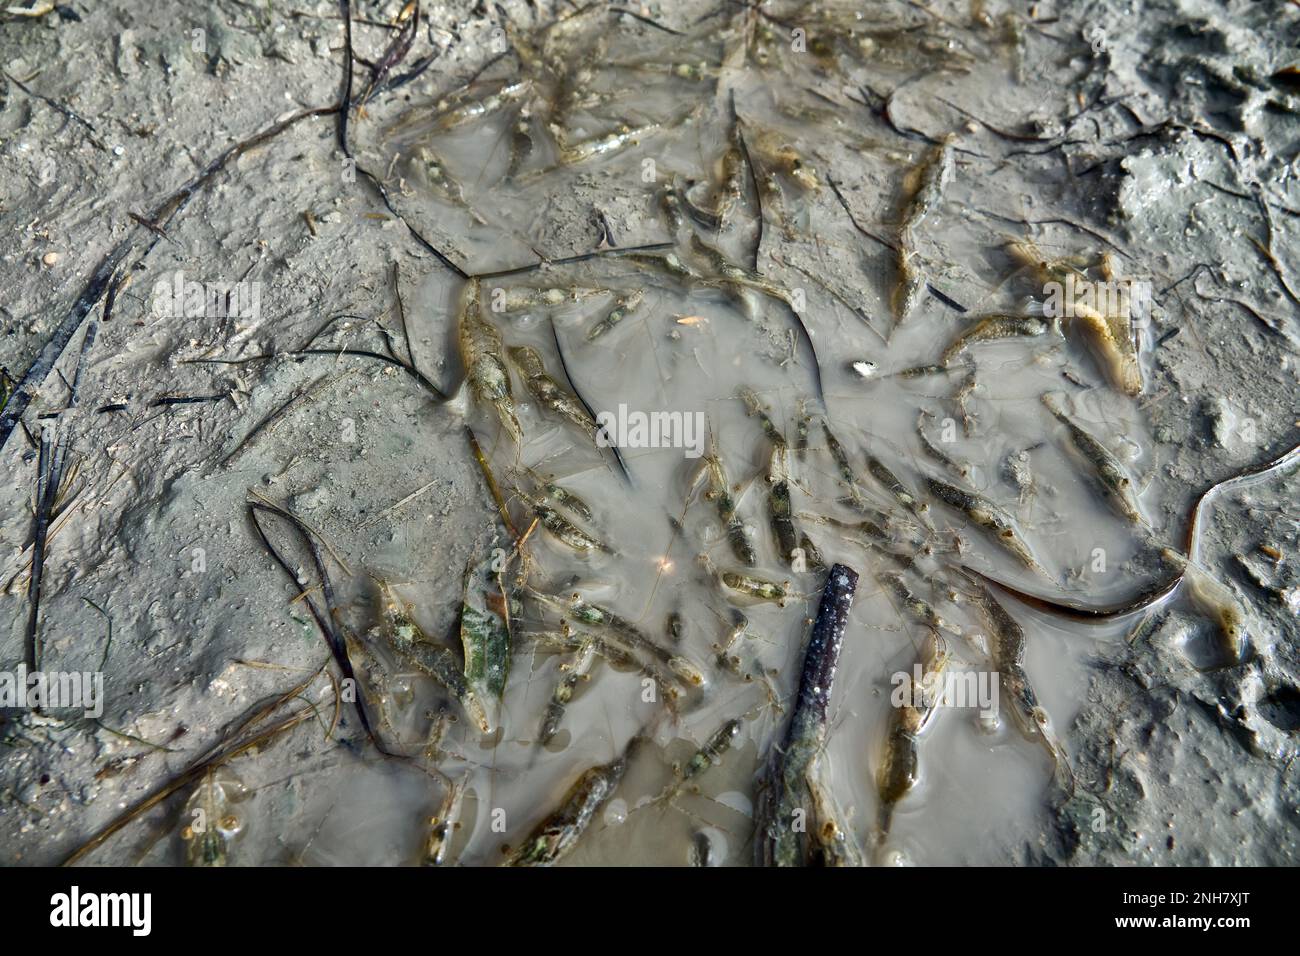 Offshore, wind., Shrimp, die, remaining, muddy, water, lagoon Stock Photo